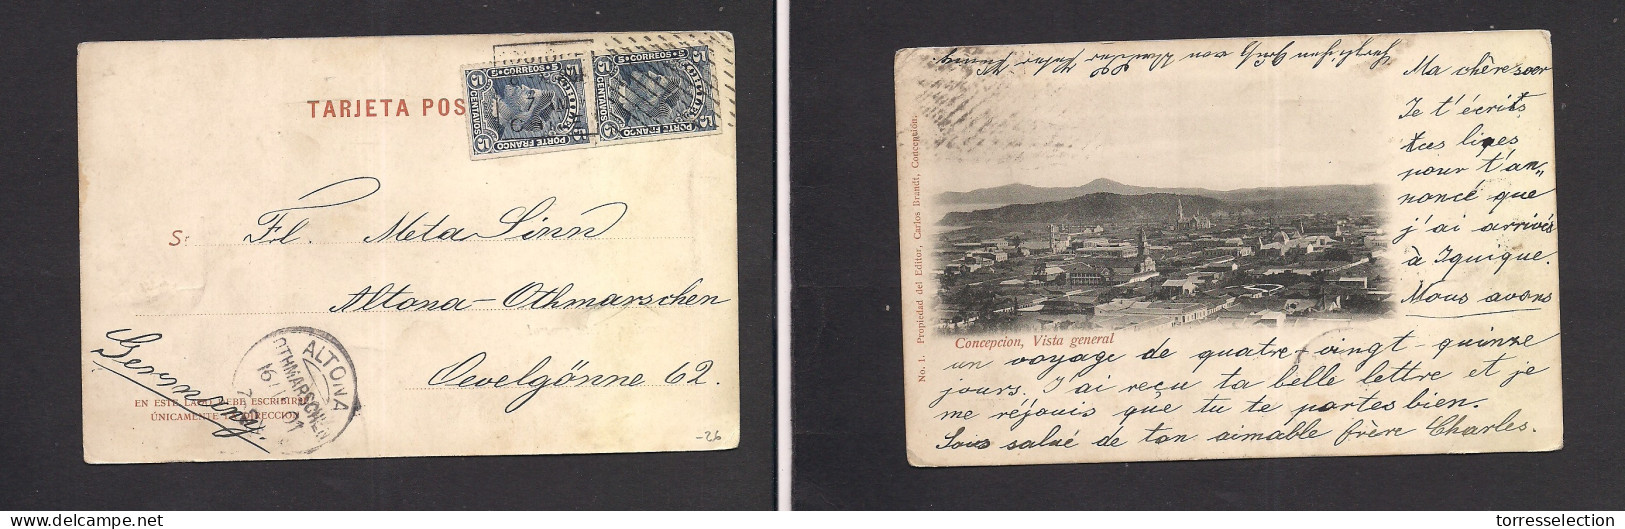 Chile - XX. 1901 (8 Oct) Iquique - Germany, Altona (16 Nov) Multifkd Ppc. Early Concepcion Pcard. Fine. - Cile